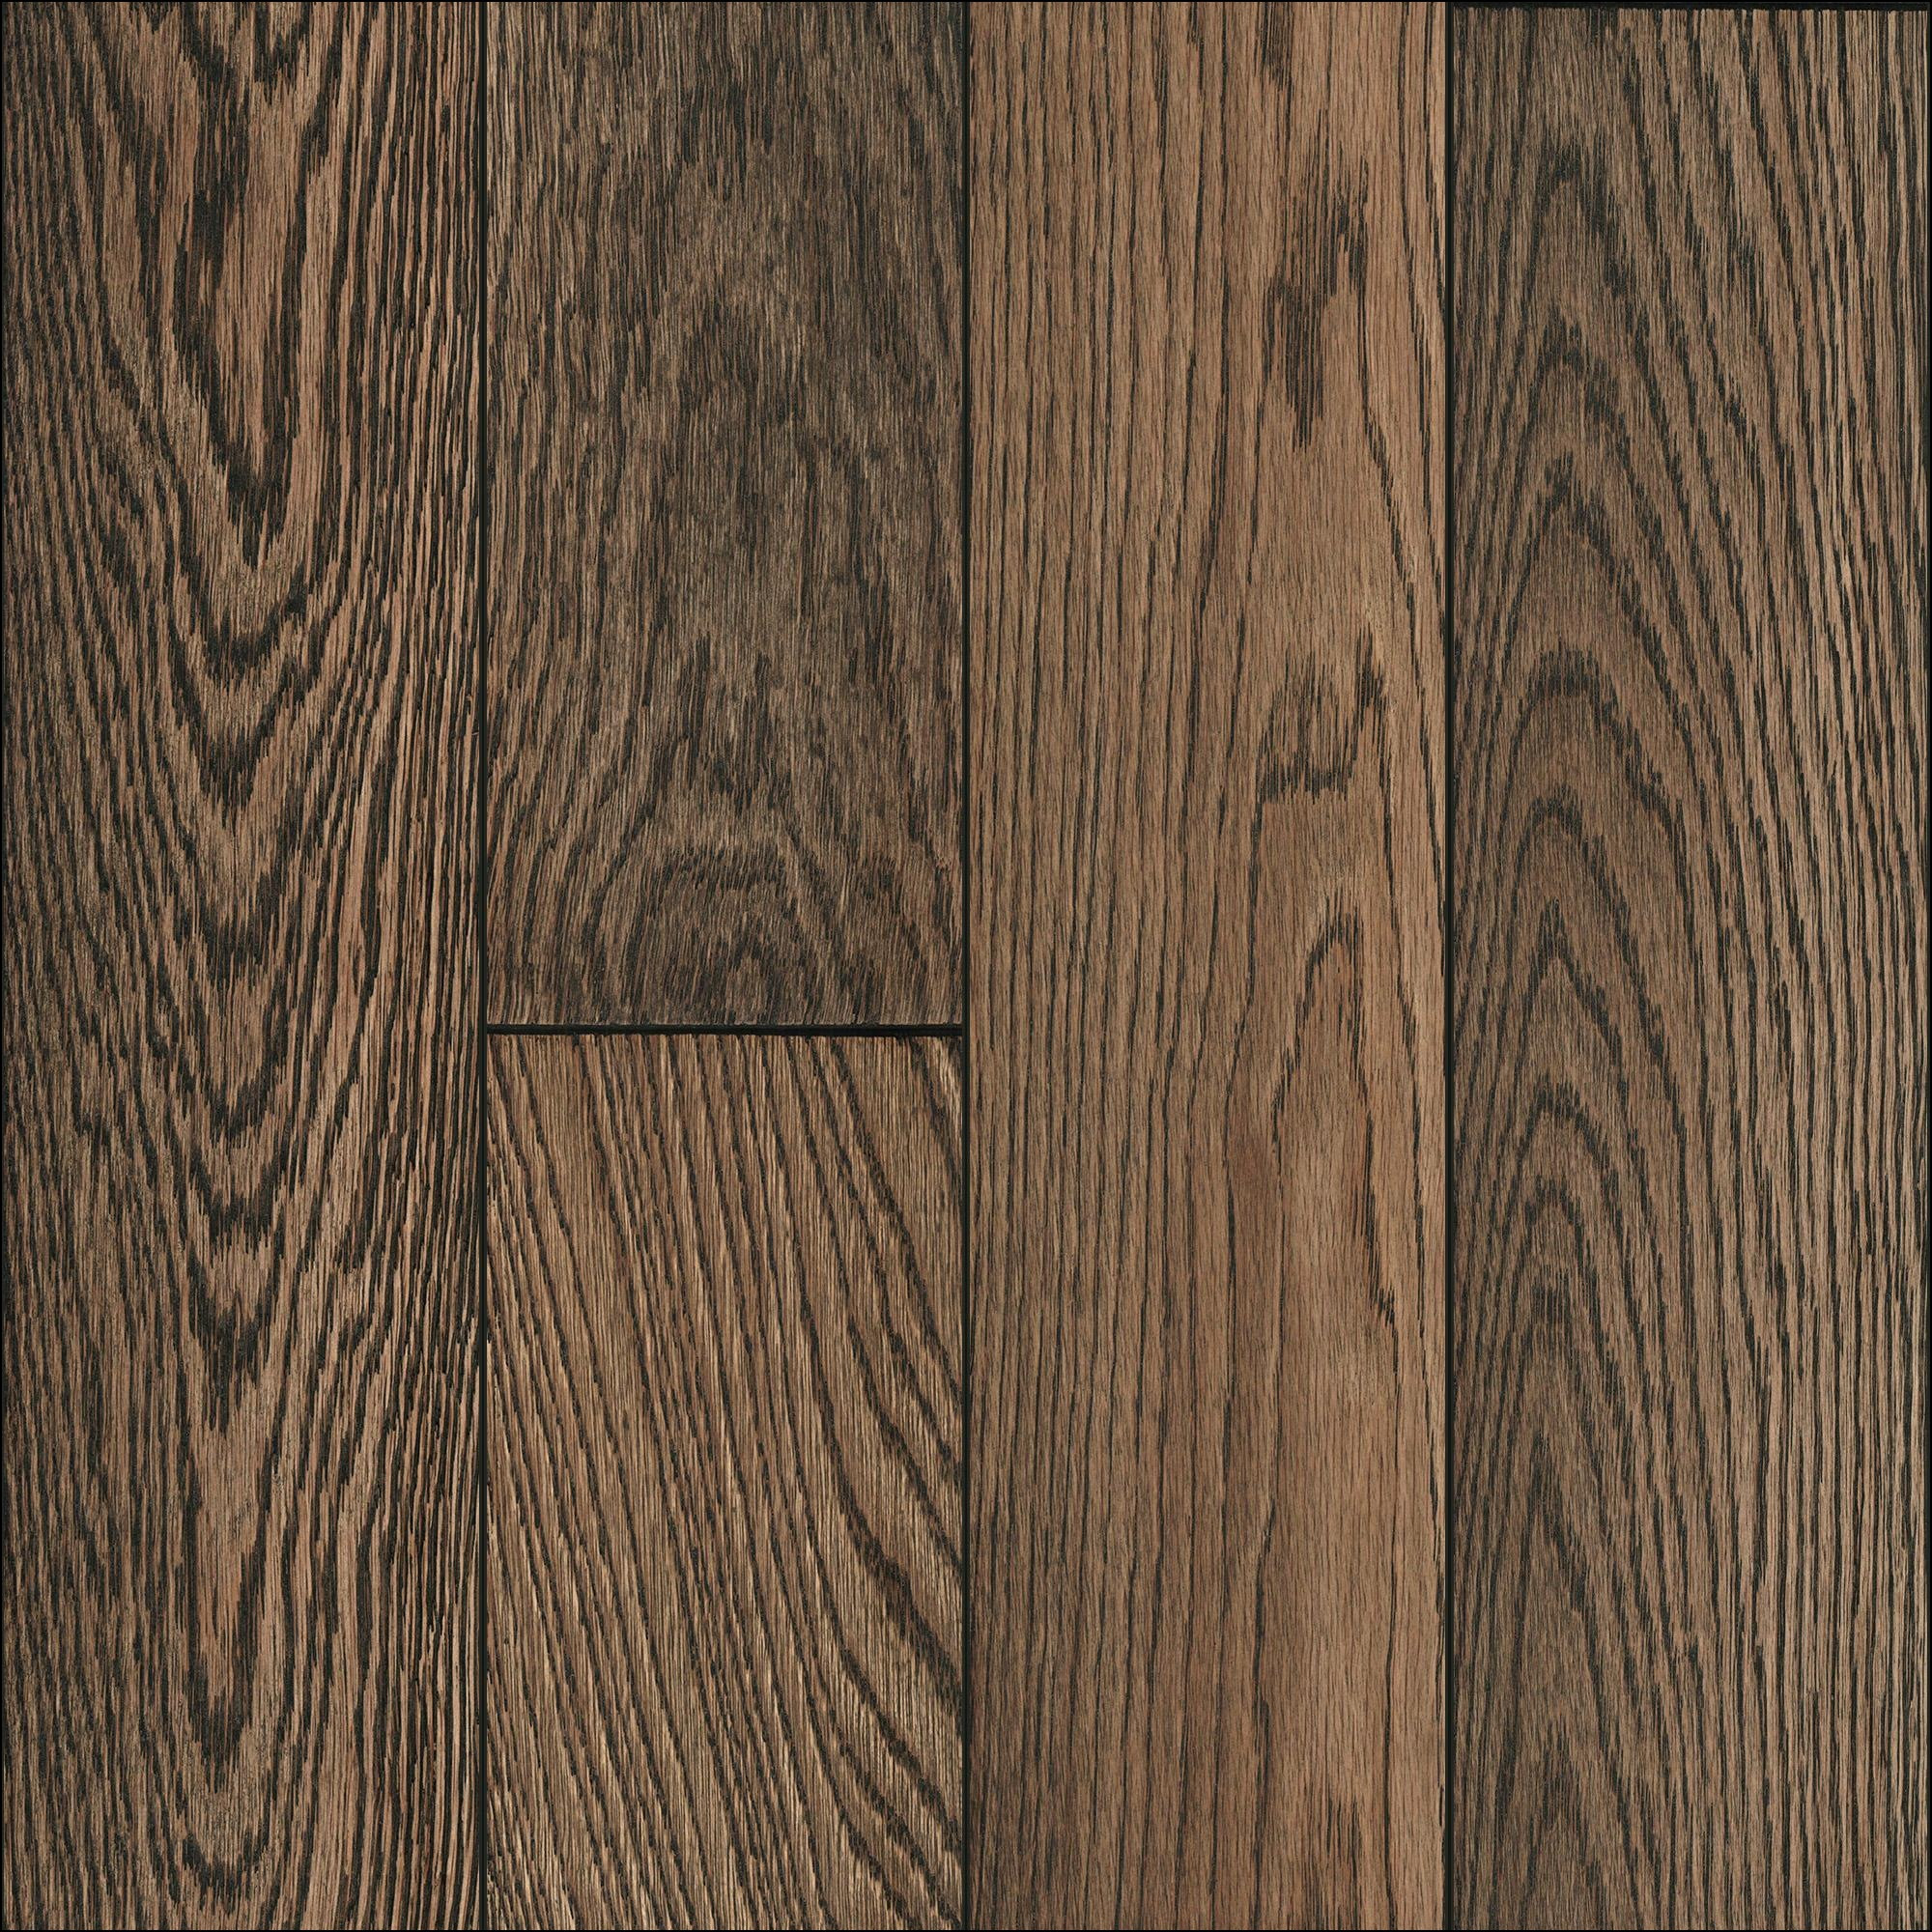 prefinished solid hardwood flooring sale of wide plank flooring ideas in wide plank dark wood flooring galerie timber hardwood wheat 5 wide solid hardwood flooring of